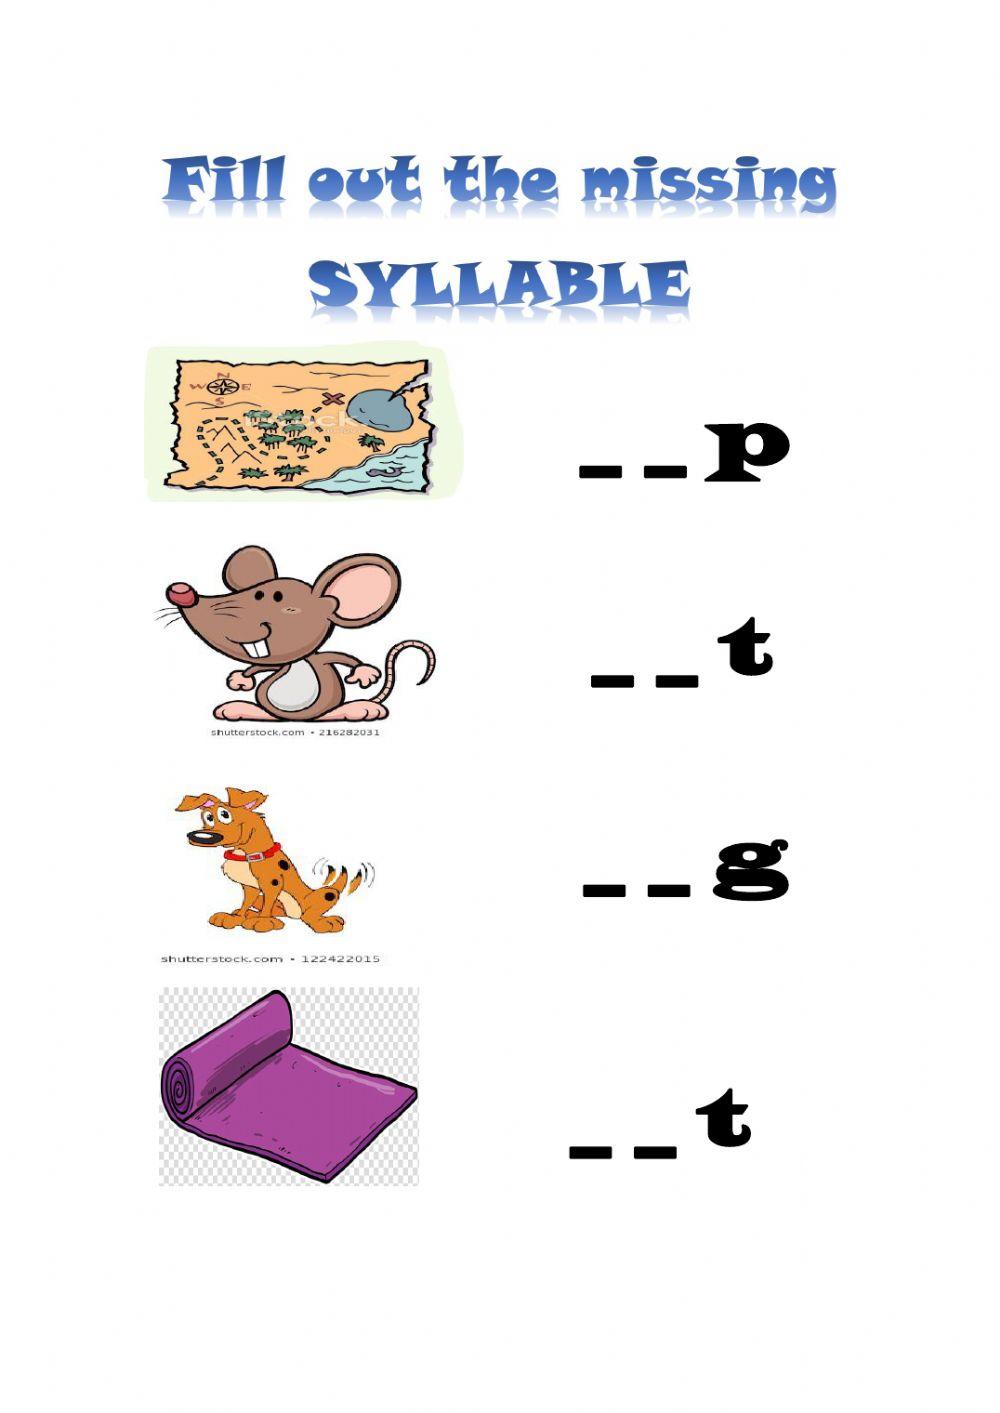 Syllables